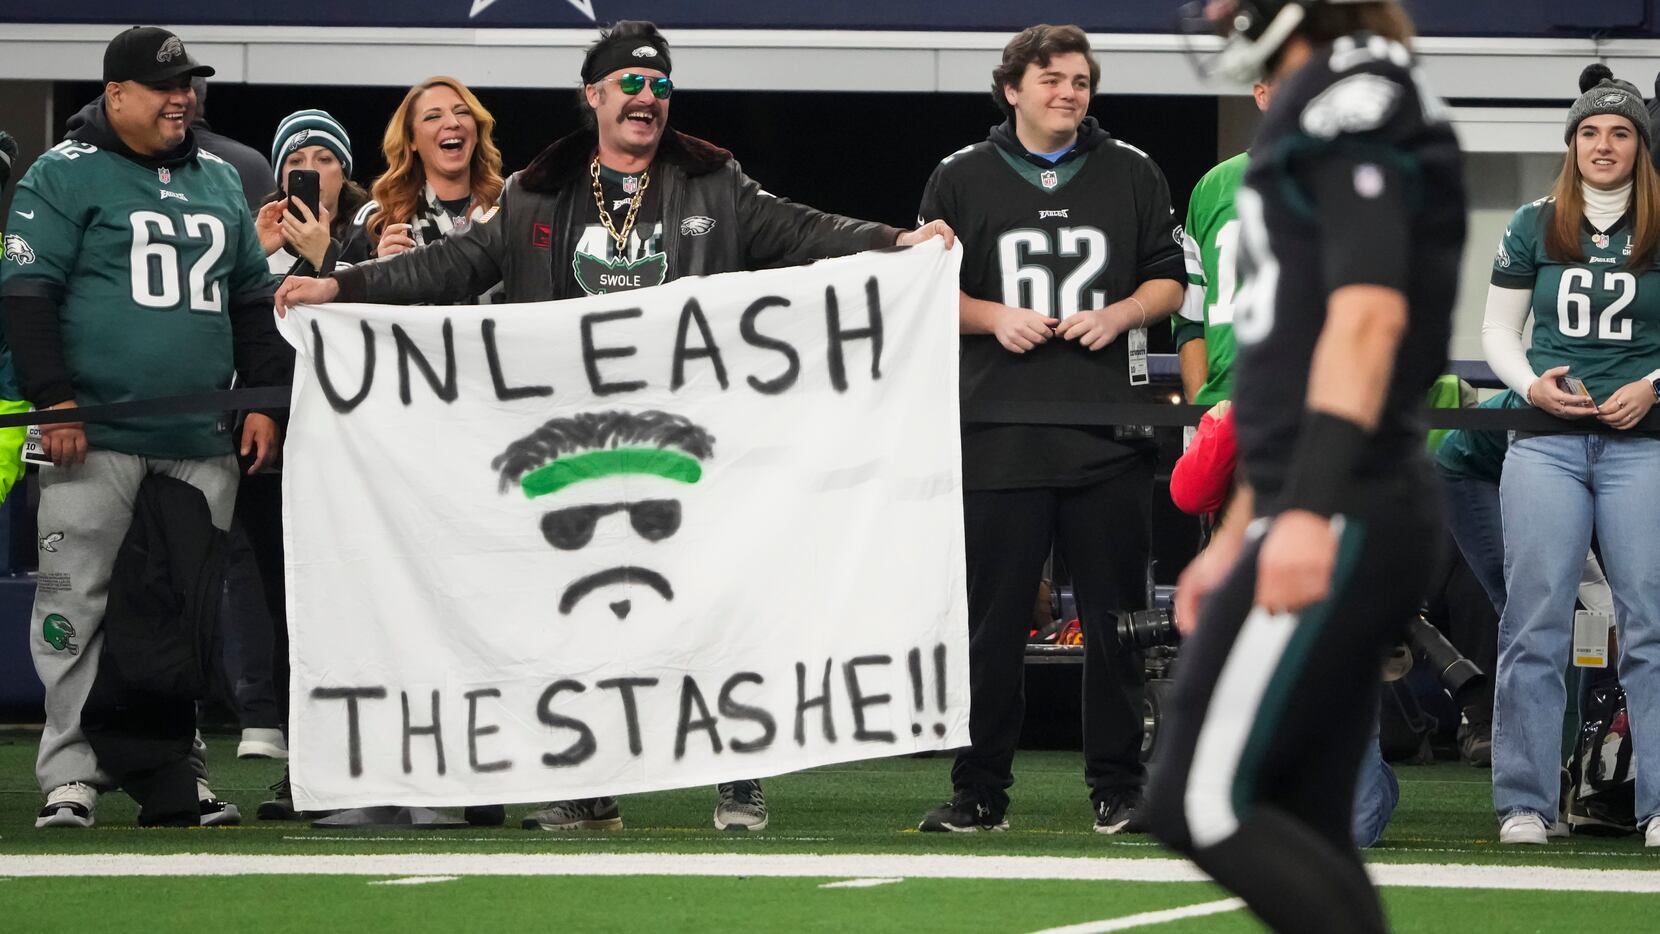 Cowboys sideline exclusive: Eagles fans made presence felt, but